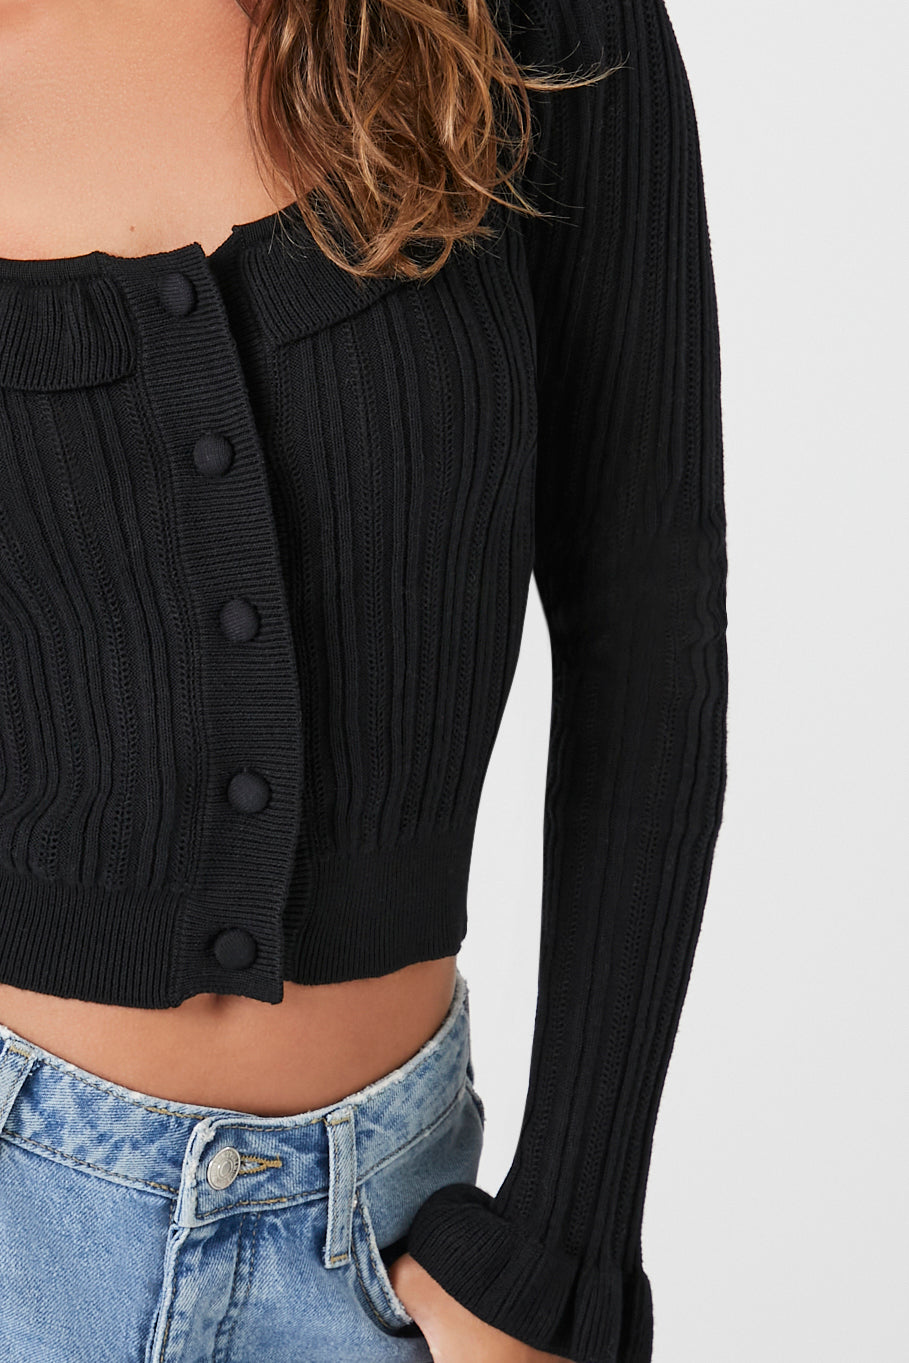 Black Ruffle-Trim Cardigan Sweater 1